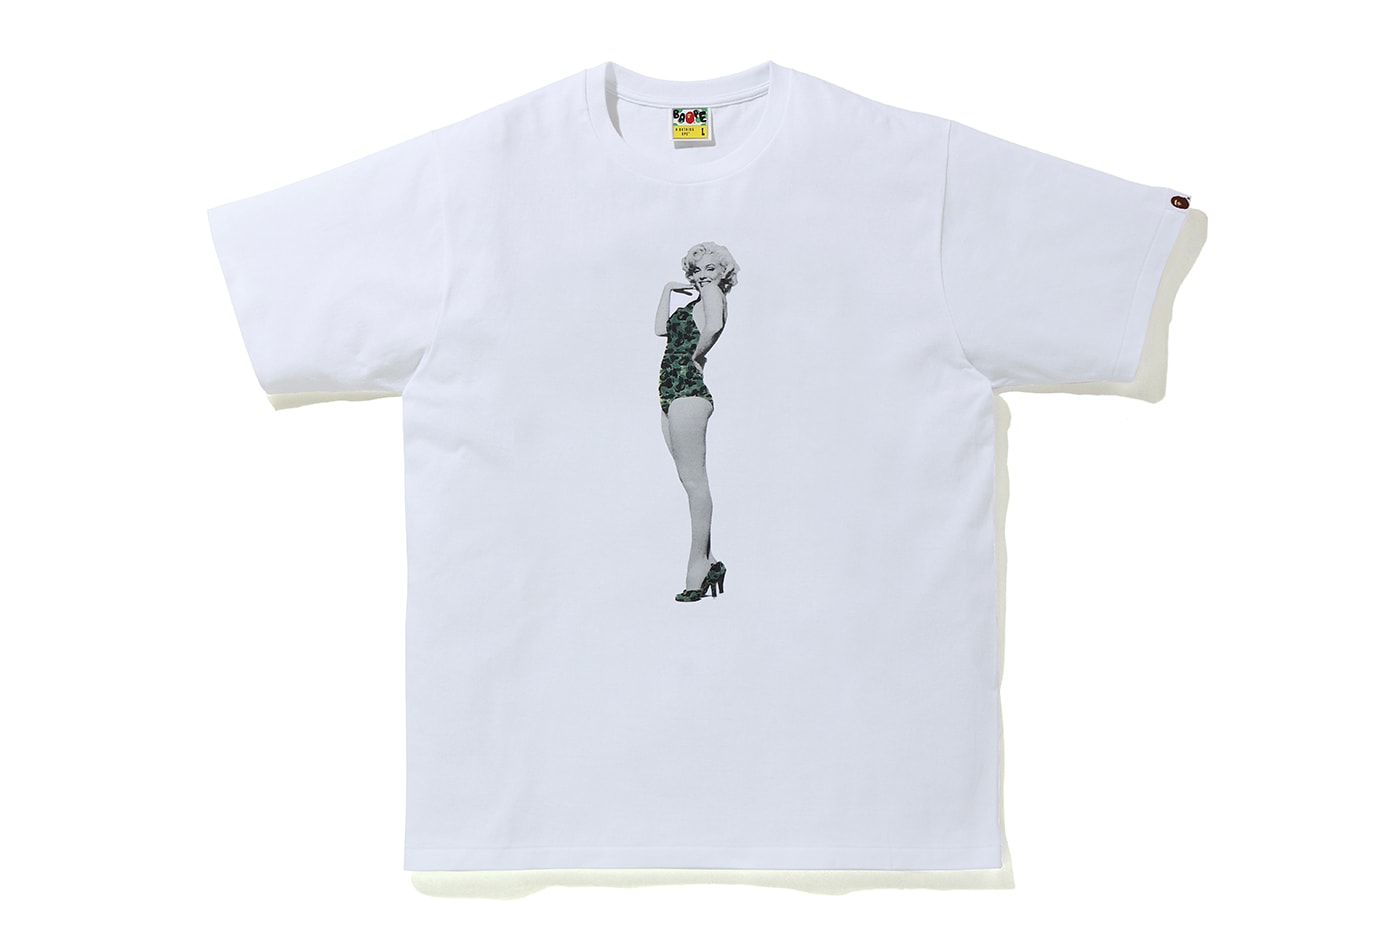 BAPE Marilyn Monroe Tshirt collection